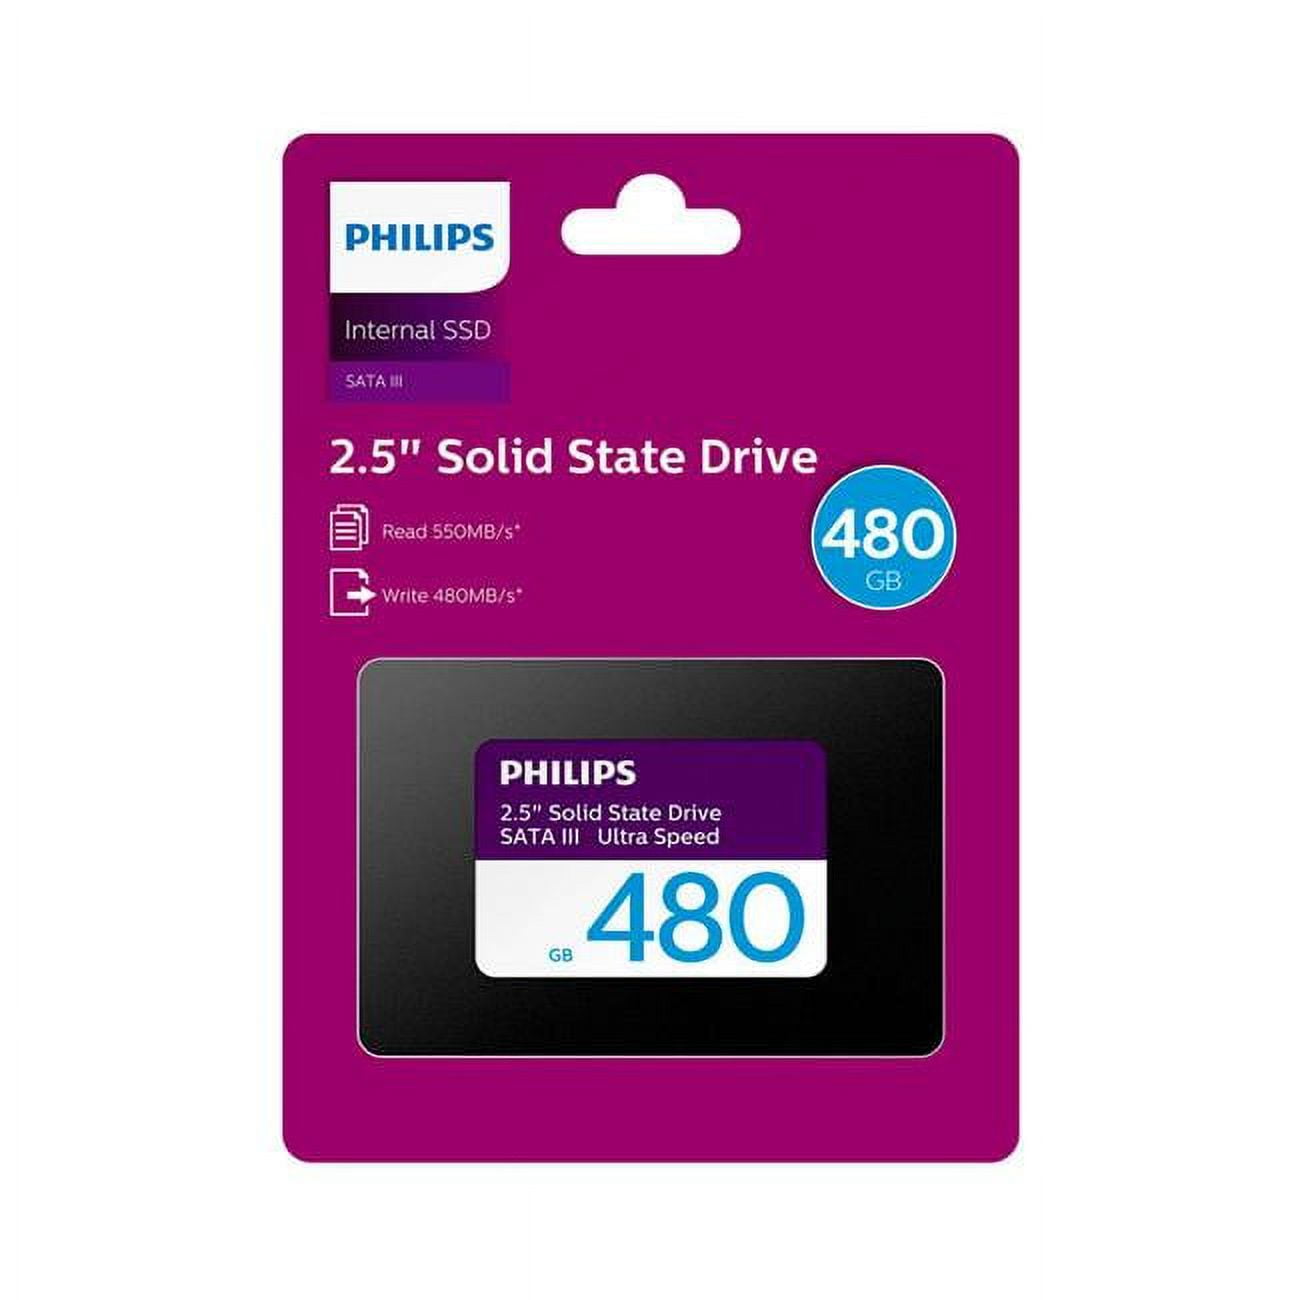 Philips PHSSDINT25480G02 SATA 3 Ultra Speed 480GB Internal SSD